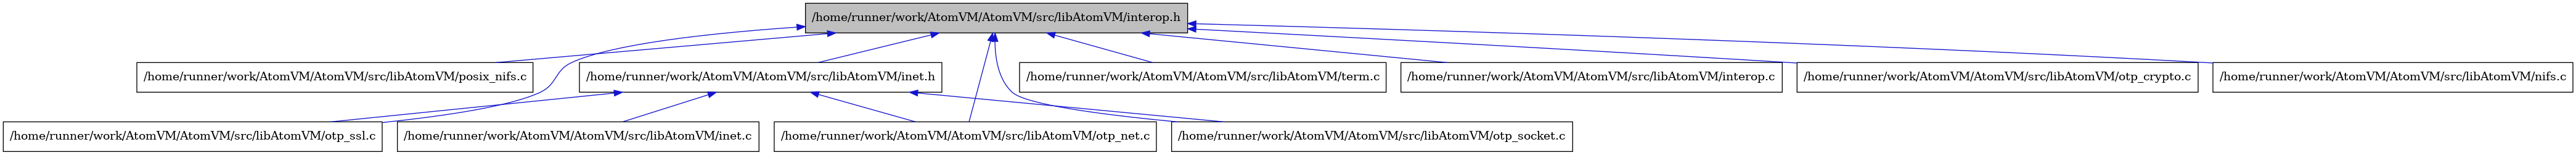 digraph {
    graph [bgcolor="#00000000"]
    node [shape=rectangle style=filled fillcolor="#FFFFFF" font=Helvetica padding=2]
    edge [color="#1414CE"]
    "10" [label="/home/runner/work/AtomVM/AtomVM/src/libAtomVM/posix_nifs.c" tooltip="/home/runner/work/AtomVM/AtomVM/src/libAtomVM/posix_nifs.c"]
    "3" [label="/home/runner/work/AtomVM/AtomVM/src/libAtomVM/inet.c" tooltip="/home/runner/work/AtomVM/AtomVM/src/libAtomVM/inet.c"]
    "2" [label="/home/runner/work/AtomVM/AtomVM/src/libAtomVM/inet.h" tooltip="/home/runner/work/AtomVM/AtomVM/src/libAtomVM/inet.h"]
    "11" [label="/home/runner/work/AtomVM/AtomVM/src/libAtomVM/term.c" tooltip="/home/runner/work/AtomVM/AtomVM/src/libAtomVM/term.c"]
    "7" [label="/home/runner/work/AtomVM/AtomVM/src/libAtomVM/interop.c" tooltip="/home/runner/work/AtomVM/AtomVM/src/libAtomVM/interop.c"]
    "6" [label="/home/runner/work/AtomVM/AtomVM/src/libAtomVM/otp_ssl.c" tooltip="/home/runner/work/AtomVM/AtomVM/src/libAtomVM/otp_ssl.c"]
    "1" [label="/home/runner/work/AtomVM/AtomVM/src/libAtomVM/interop.h" tooltip="/home/runner/work/AtomVM/AtomVM/src/libAtomVM/interop.h" fillcolor="#BFBFBF"]
    "9" [label="/home/runner/work/AtomVM/AtomVM/src/libAtomVM/otp_crypto.c" tooltip="/home/runner/work/AtomVM/AtomVM/src/libAtomVM/otp_crypto.c"]
    "4" [label="/home/runner/work/AtomVM/AtomVM/src/libAtomVM/otp_net.c" tooltip="/home/runner/work/AtomVM/AtomVM/src/libAtomVM/otp_net.c"]
    "8" [label="/home/runner/work/AtomVM/AtomVM/src/libAtomVM/nifs.c" tooltip="/home/runner/work/AtomVM/AtomVM/src/libAtomVM/nifs.c"]
    "5" [label="/home/runner/work/AtomVM/AtomVM/src/libAtomVM/otp_socket.c" tooltip="/home/runner/work/AtomVM/AtomVM/src/libAtomVM/otp_socket.c"]
    "2" -> "3" [dir=back tooltip="include"]
    "2" -> "4" [dir=back tooltip="include"]
    "2" -> "5" [dir=back tooltip="include"]
    "2" -> "6" [dir=back tooltip="include"]
    "1" -> "2" [dir=back tooltip="include"]
    "1" -> "7" [dir=back tooltip="include"]
    "1" -> "8" [dir=back tooltip="include"]
    "1" -> "9" [dir=back tooltip="include"]
    "1" -> "4" [dir=back tooltip="include"]
    "1" -> "5" [dir=back tooltip="include"]
    "1" -> "6" [dir=back tooltip="include"]
    "1" -> "10" [dir=back tooltip="include"]
    "1" -> "11" [dir=back tooltip="include"]
}